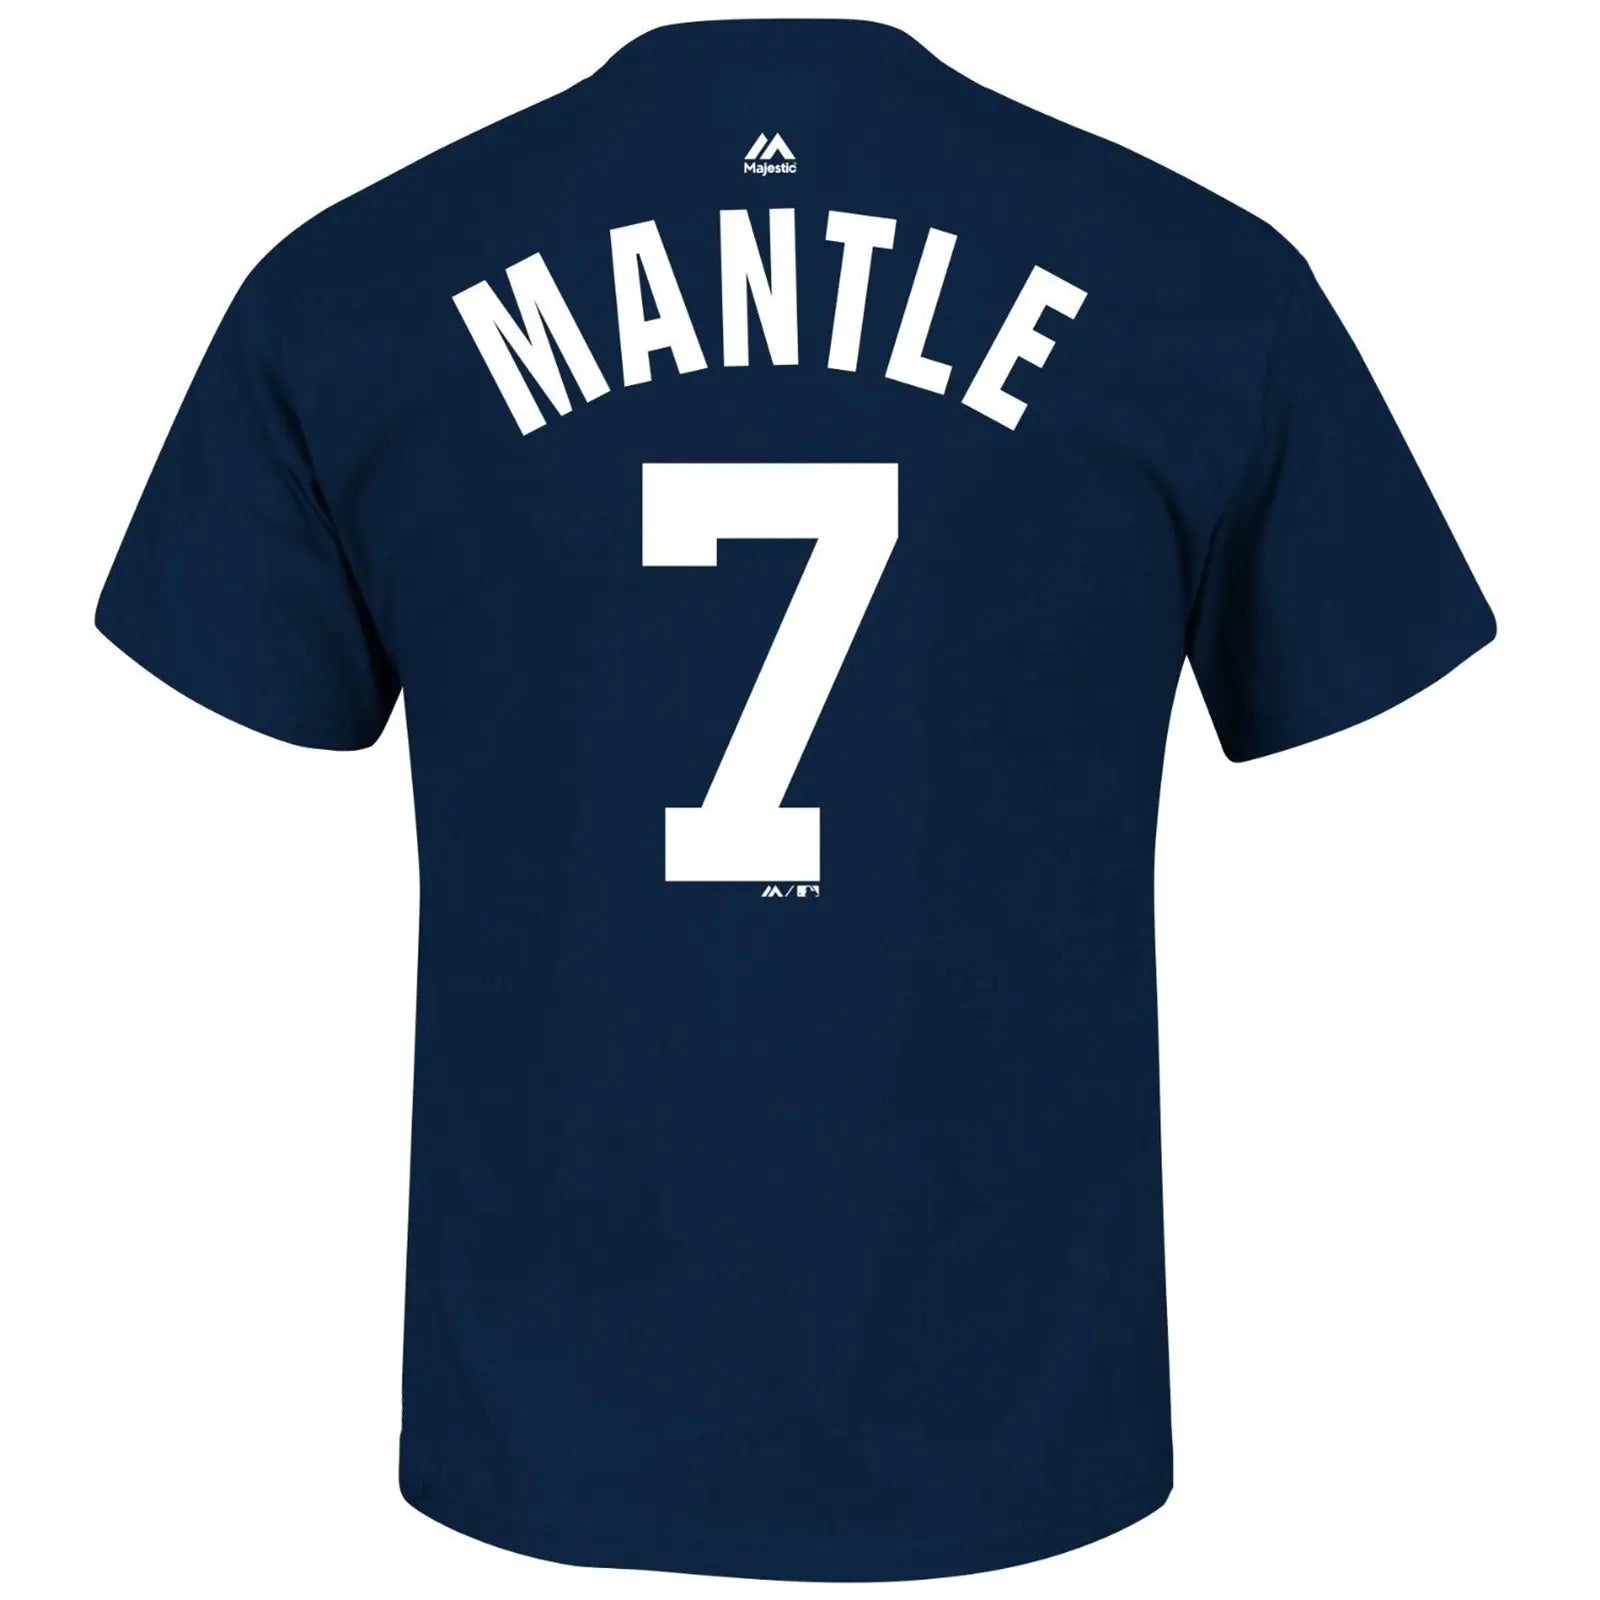 New York Yankees Mantle #7 2 Sided Shirt 